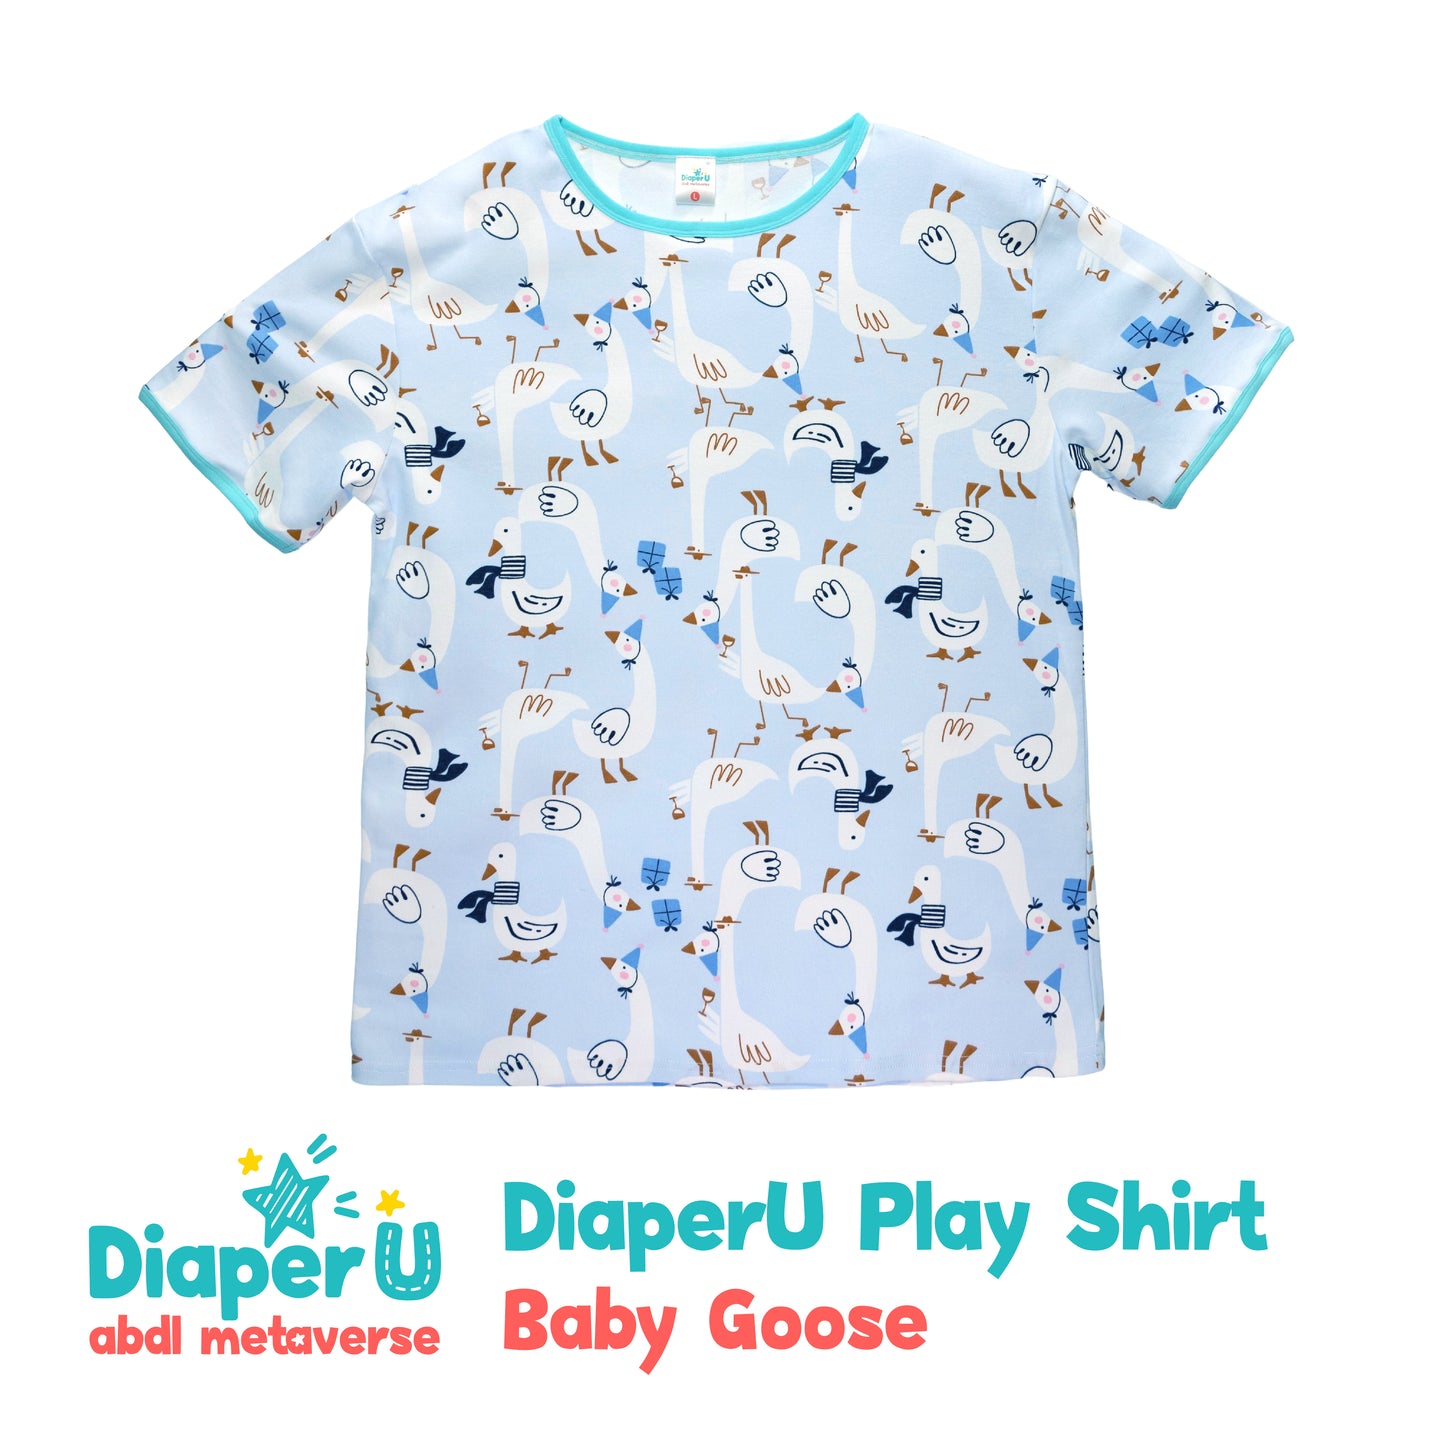 ABDL Cotton Shirts - Baby Goose